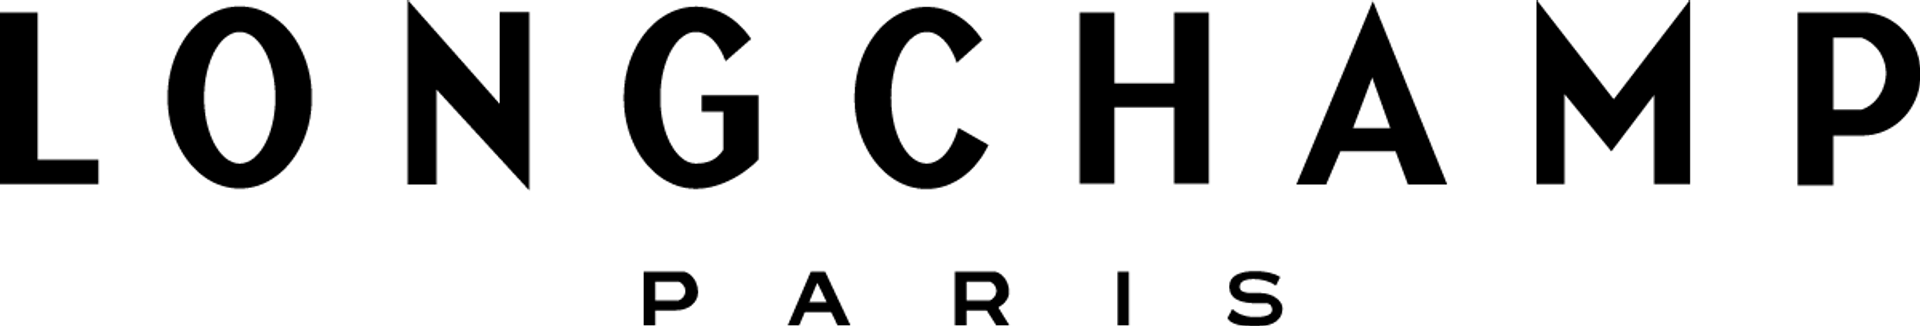 LONGCHAMP logo of current flyer